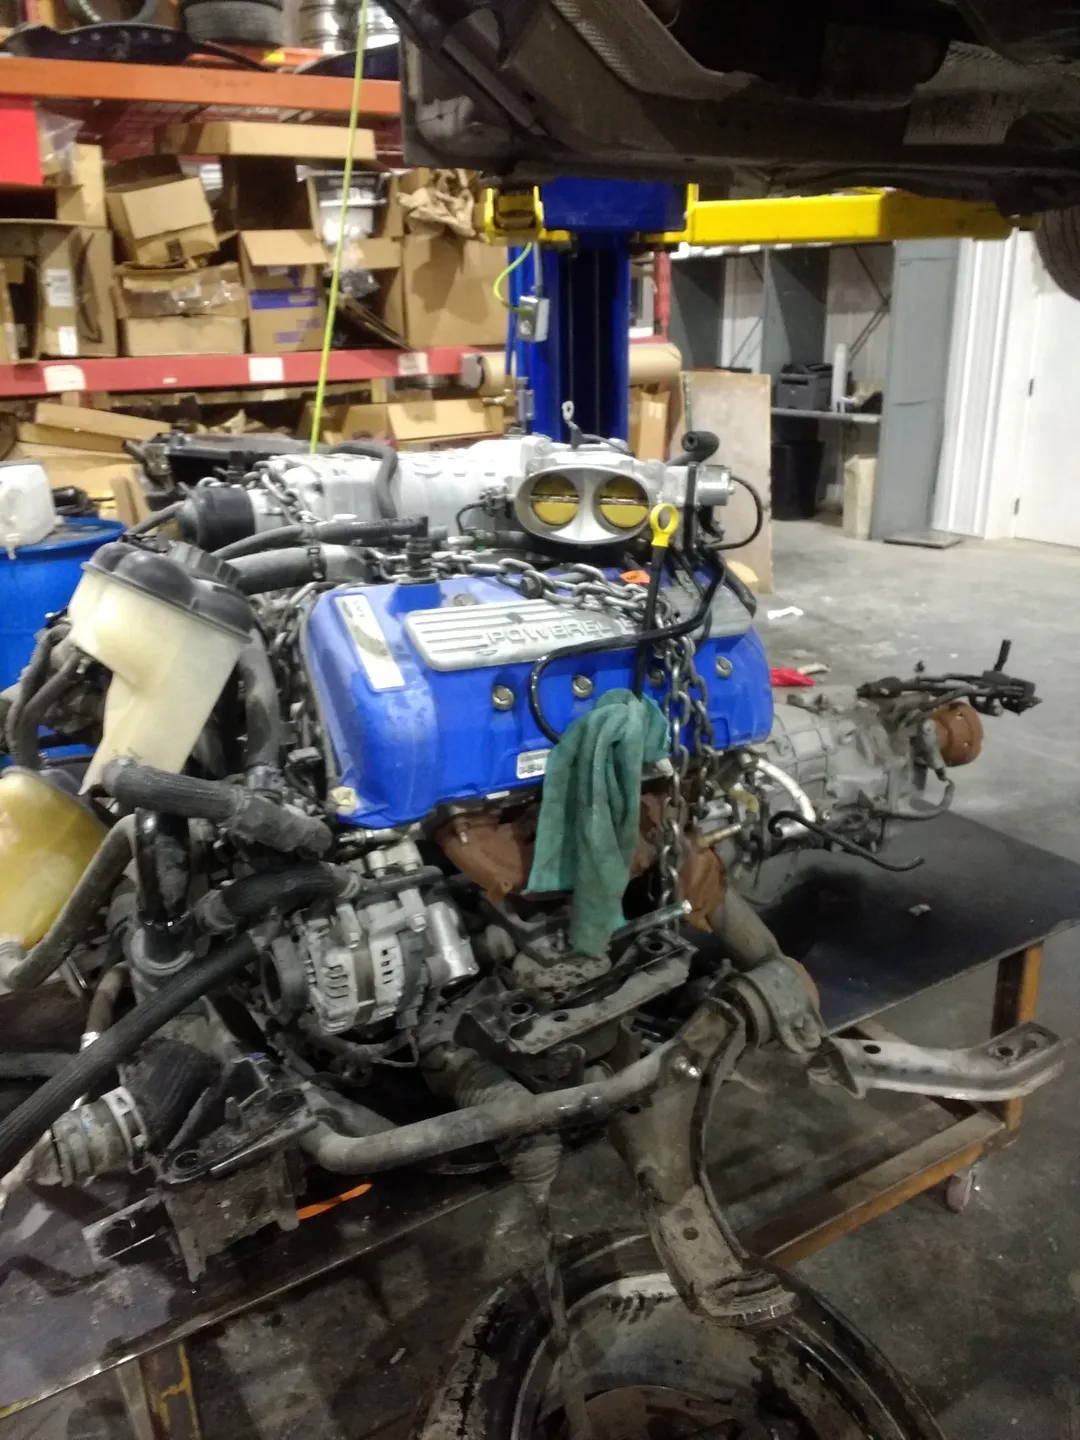 The engine, Custom fabricated auto part